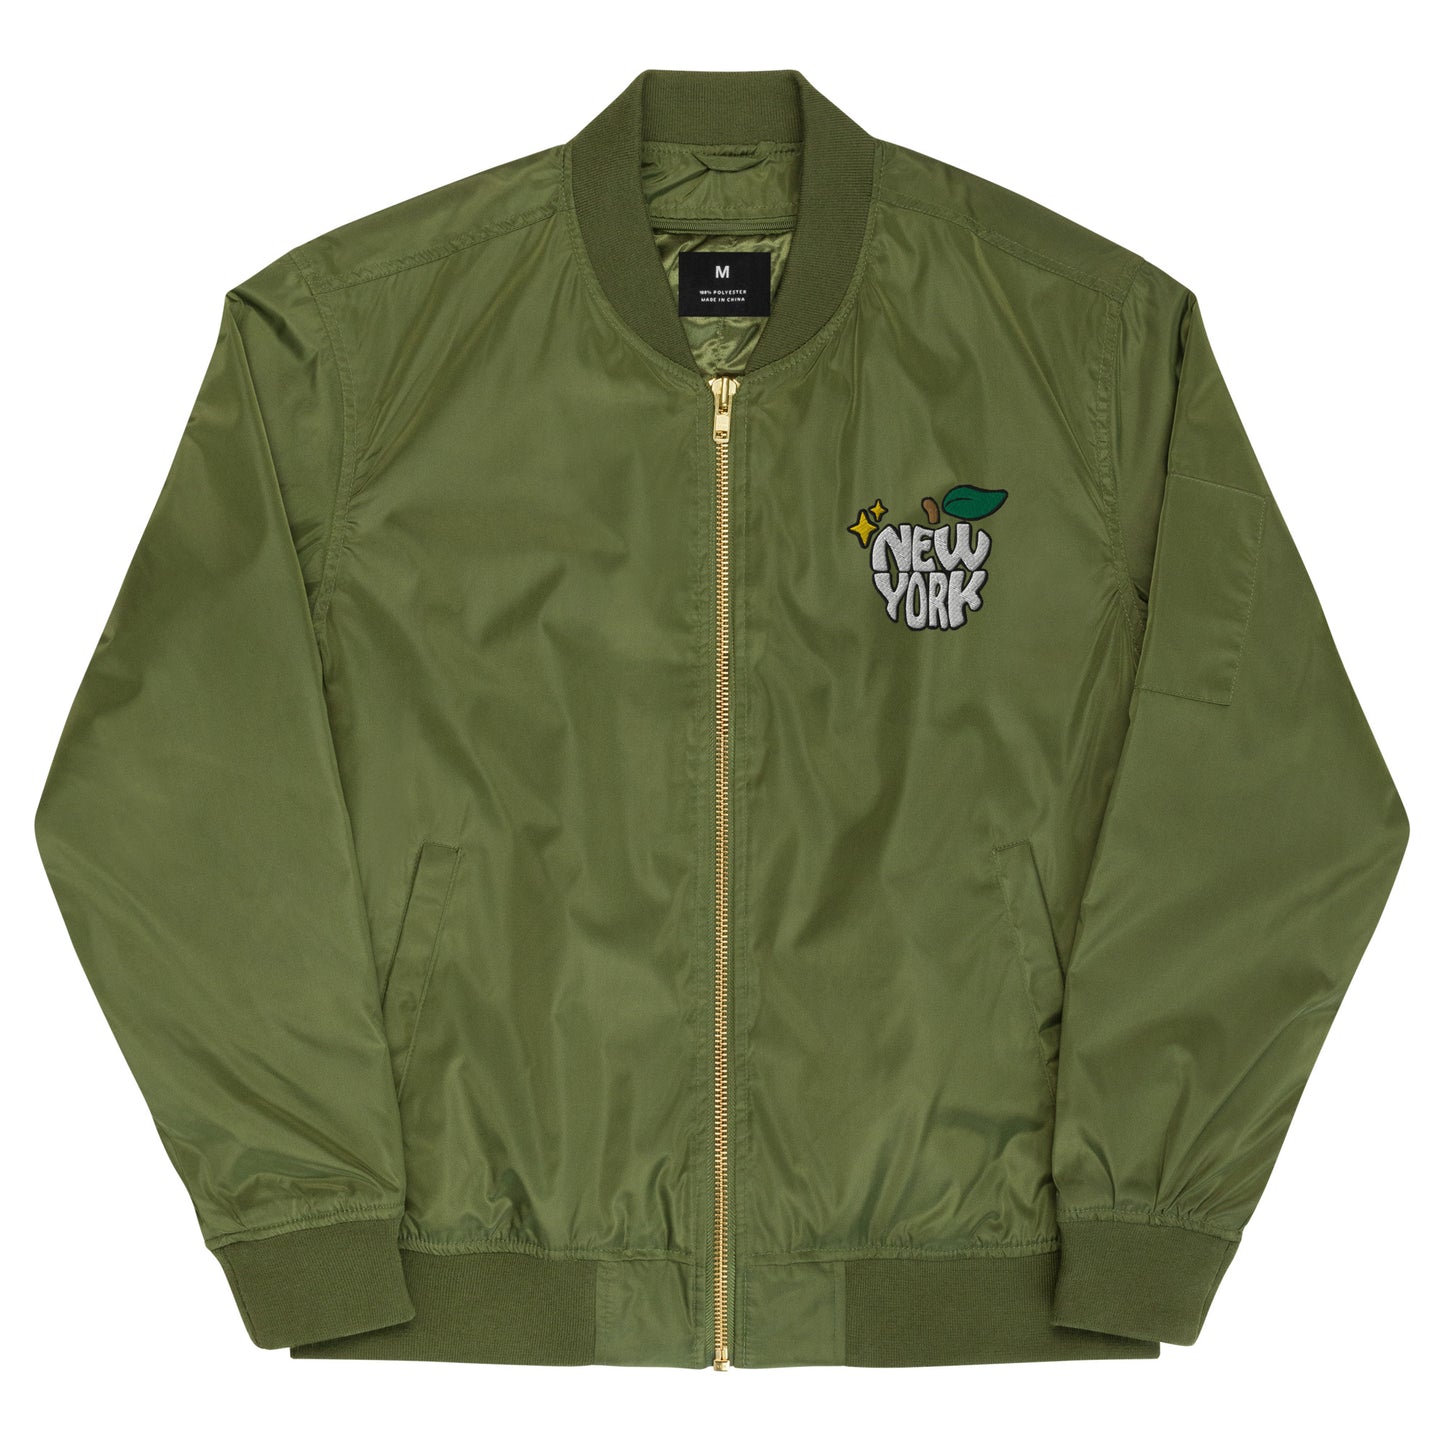 New York '24 Logo Embroidered Premium recycled bomber jacket